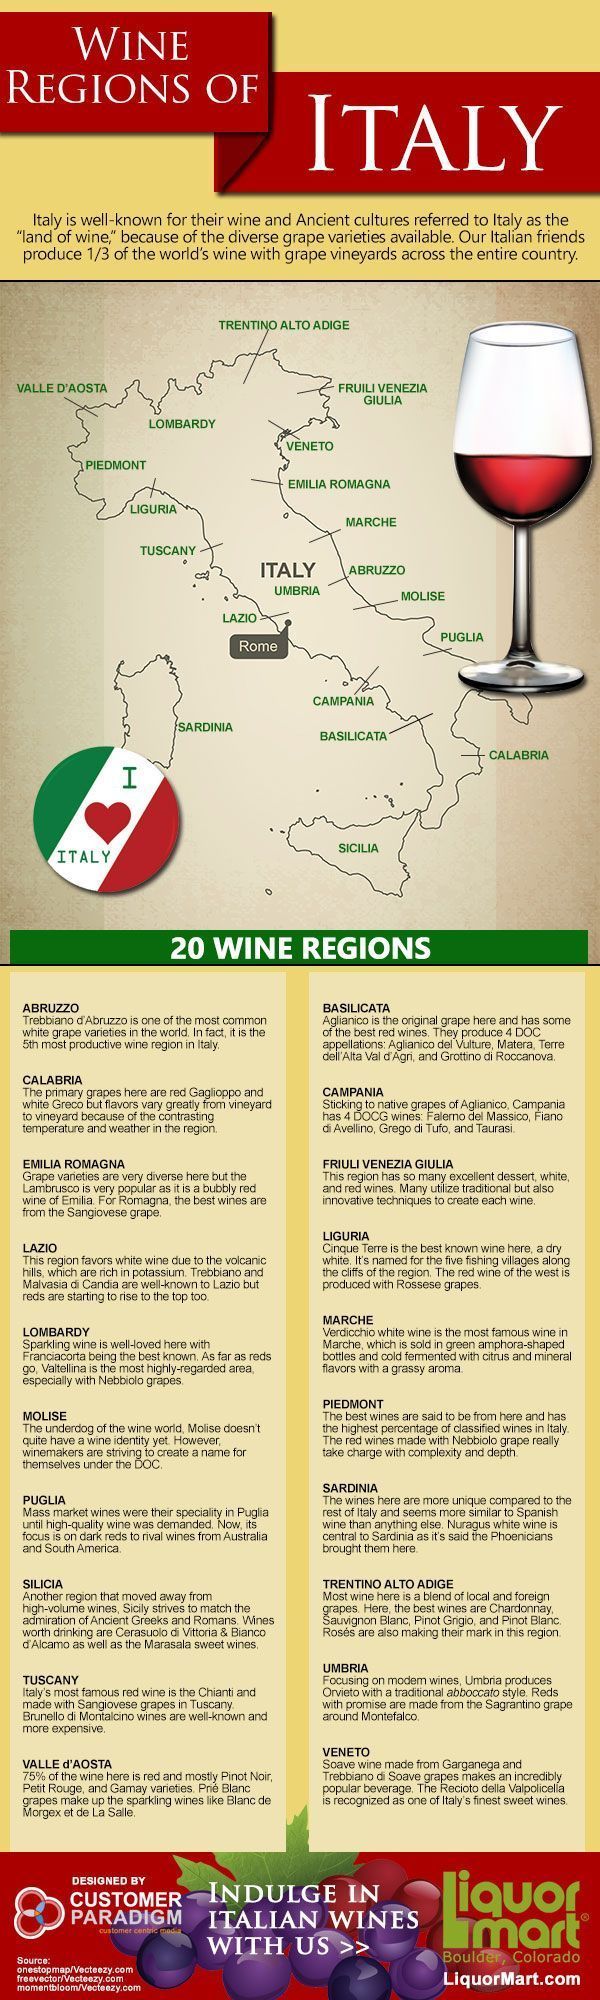 italian wine culture, storing italian wine, opening italian wine bottle, italian wine regions, italian wine classification